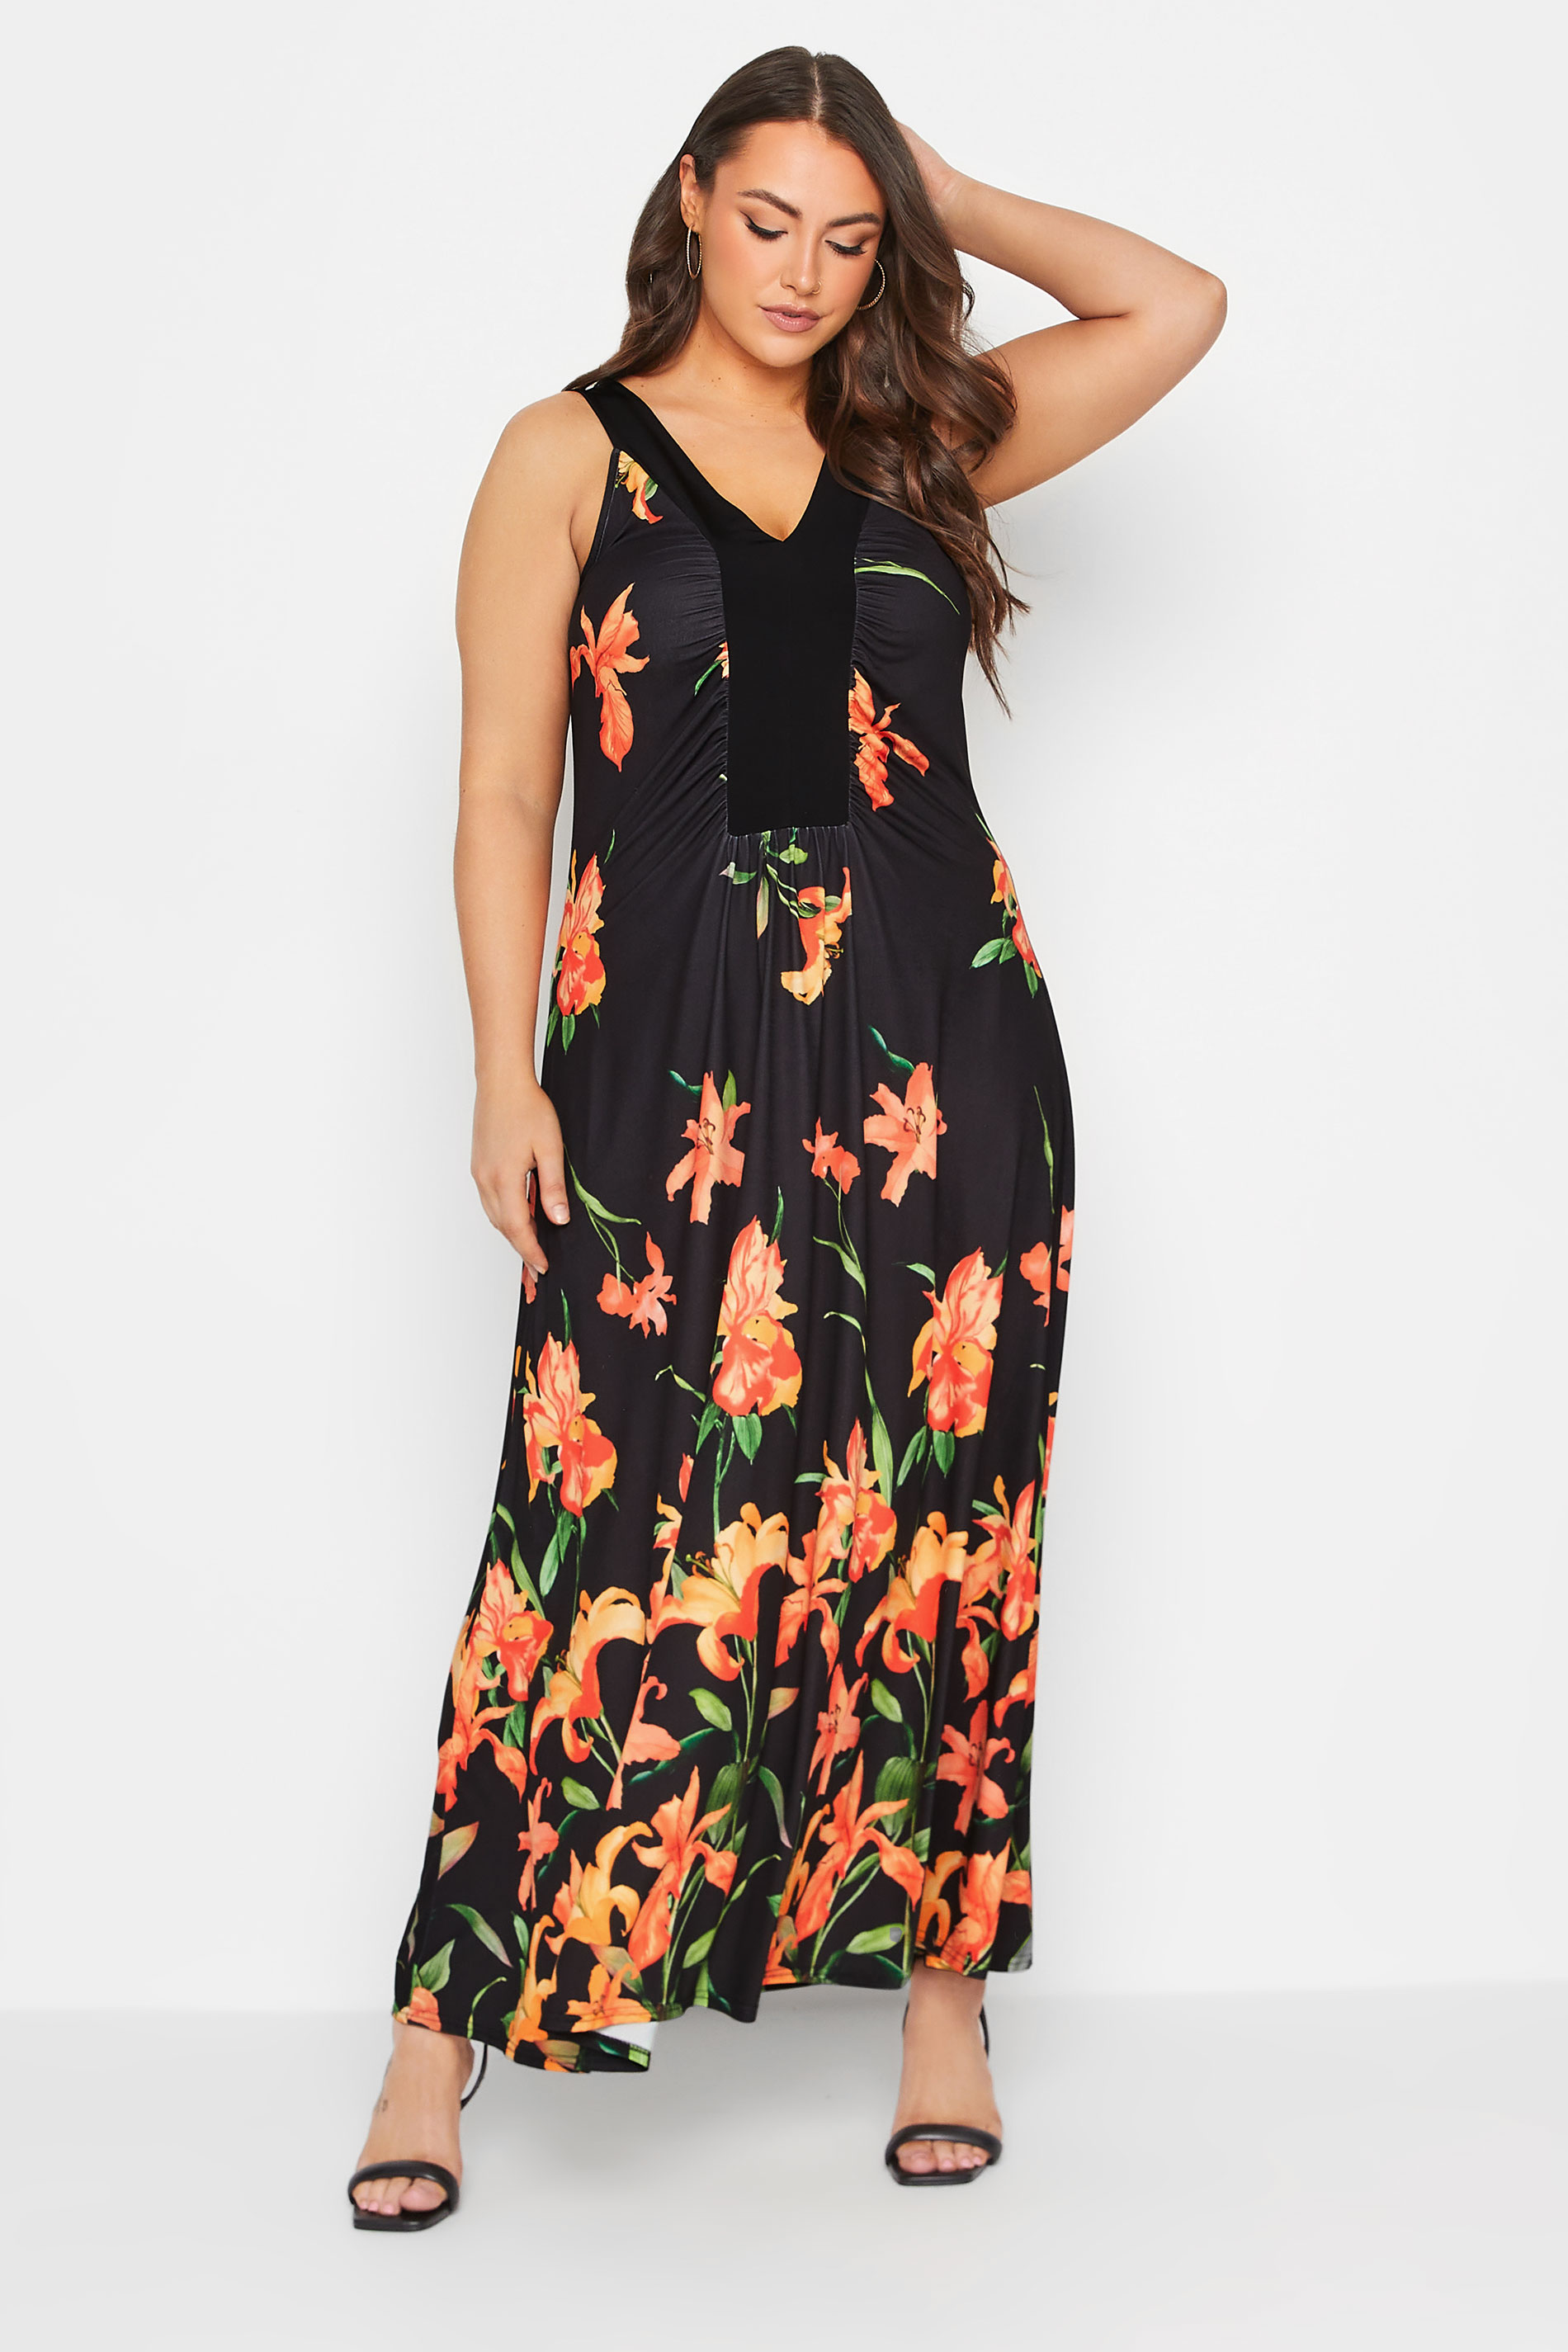 YOURS LONDON Curve Plus Size Black Floral Maxi Dress | Yours Clothing  1